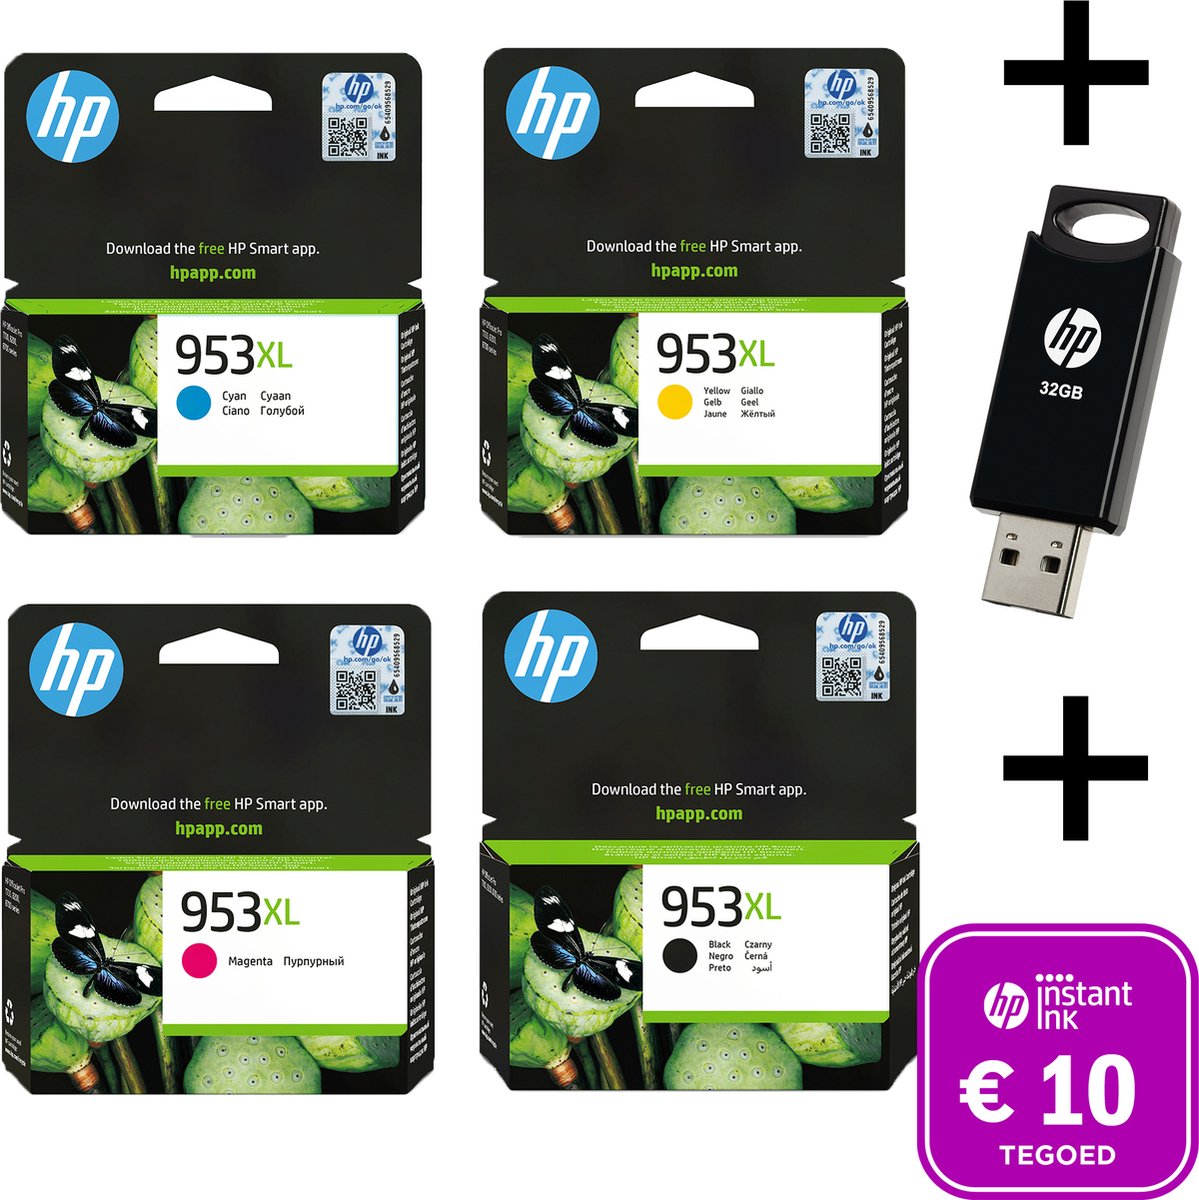 HP 953 XL Multi Bundel - Met Gratis 32 GB USB Stick & Instant Ink tegoed